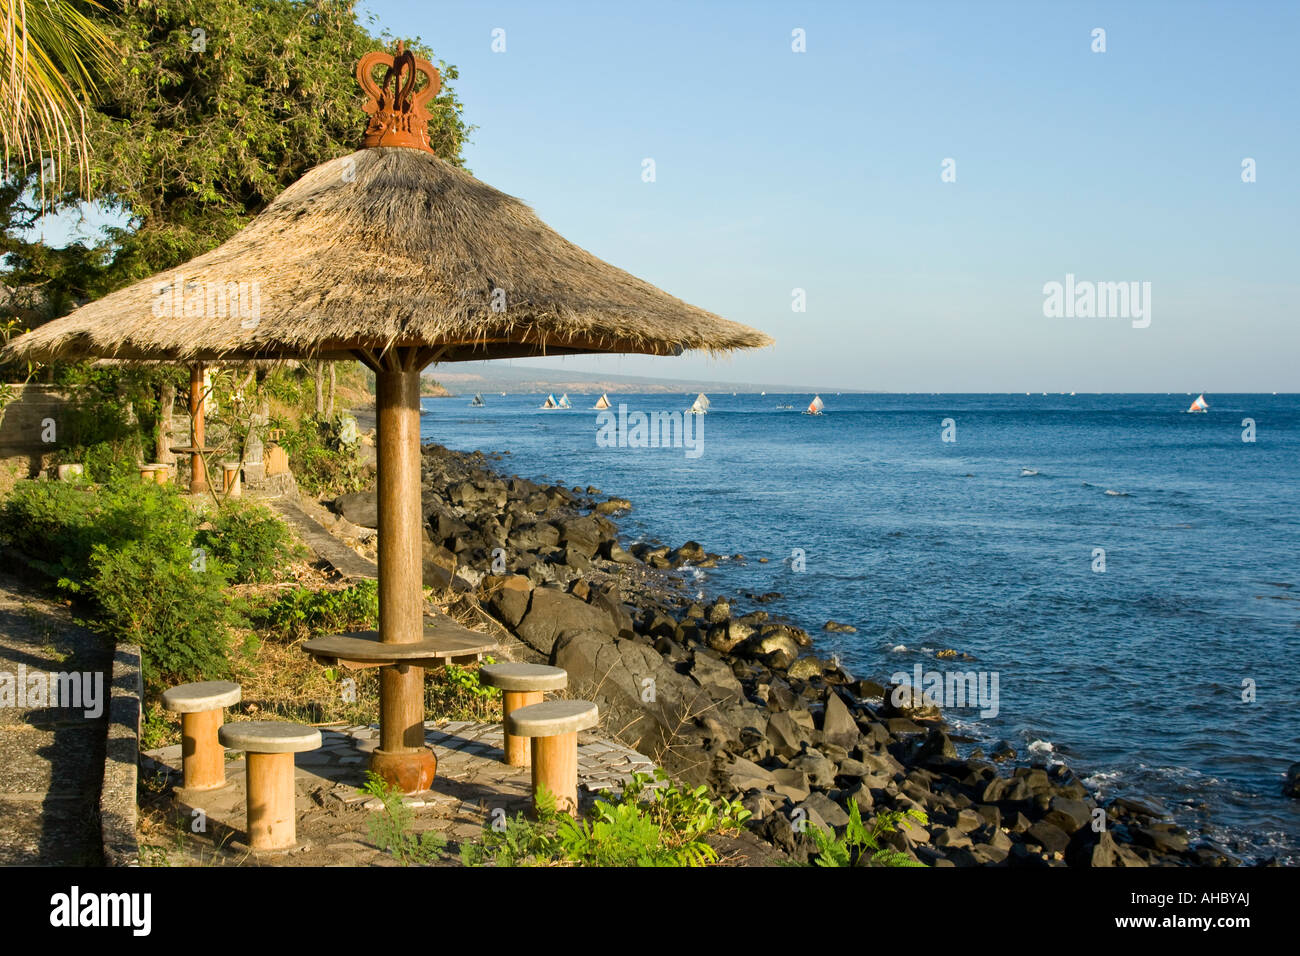 Resort Regenschirm Jukung oder traditionelle Fischerei Segelboote Amed Bali Indonesien Stockfoto